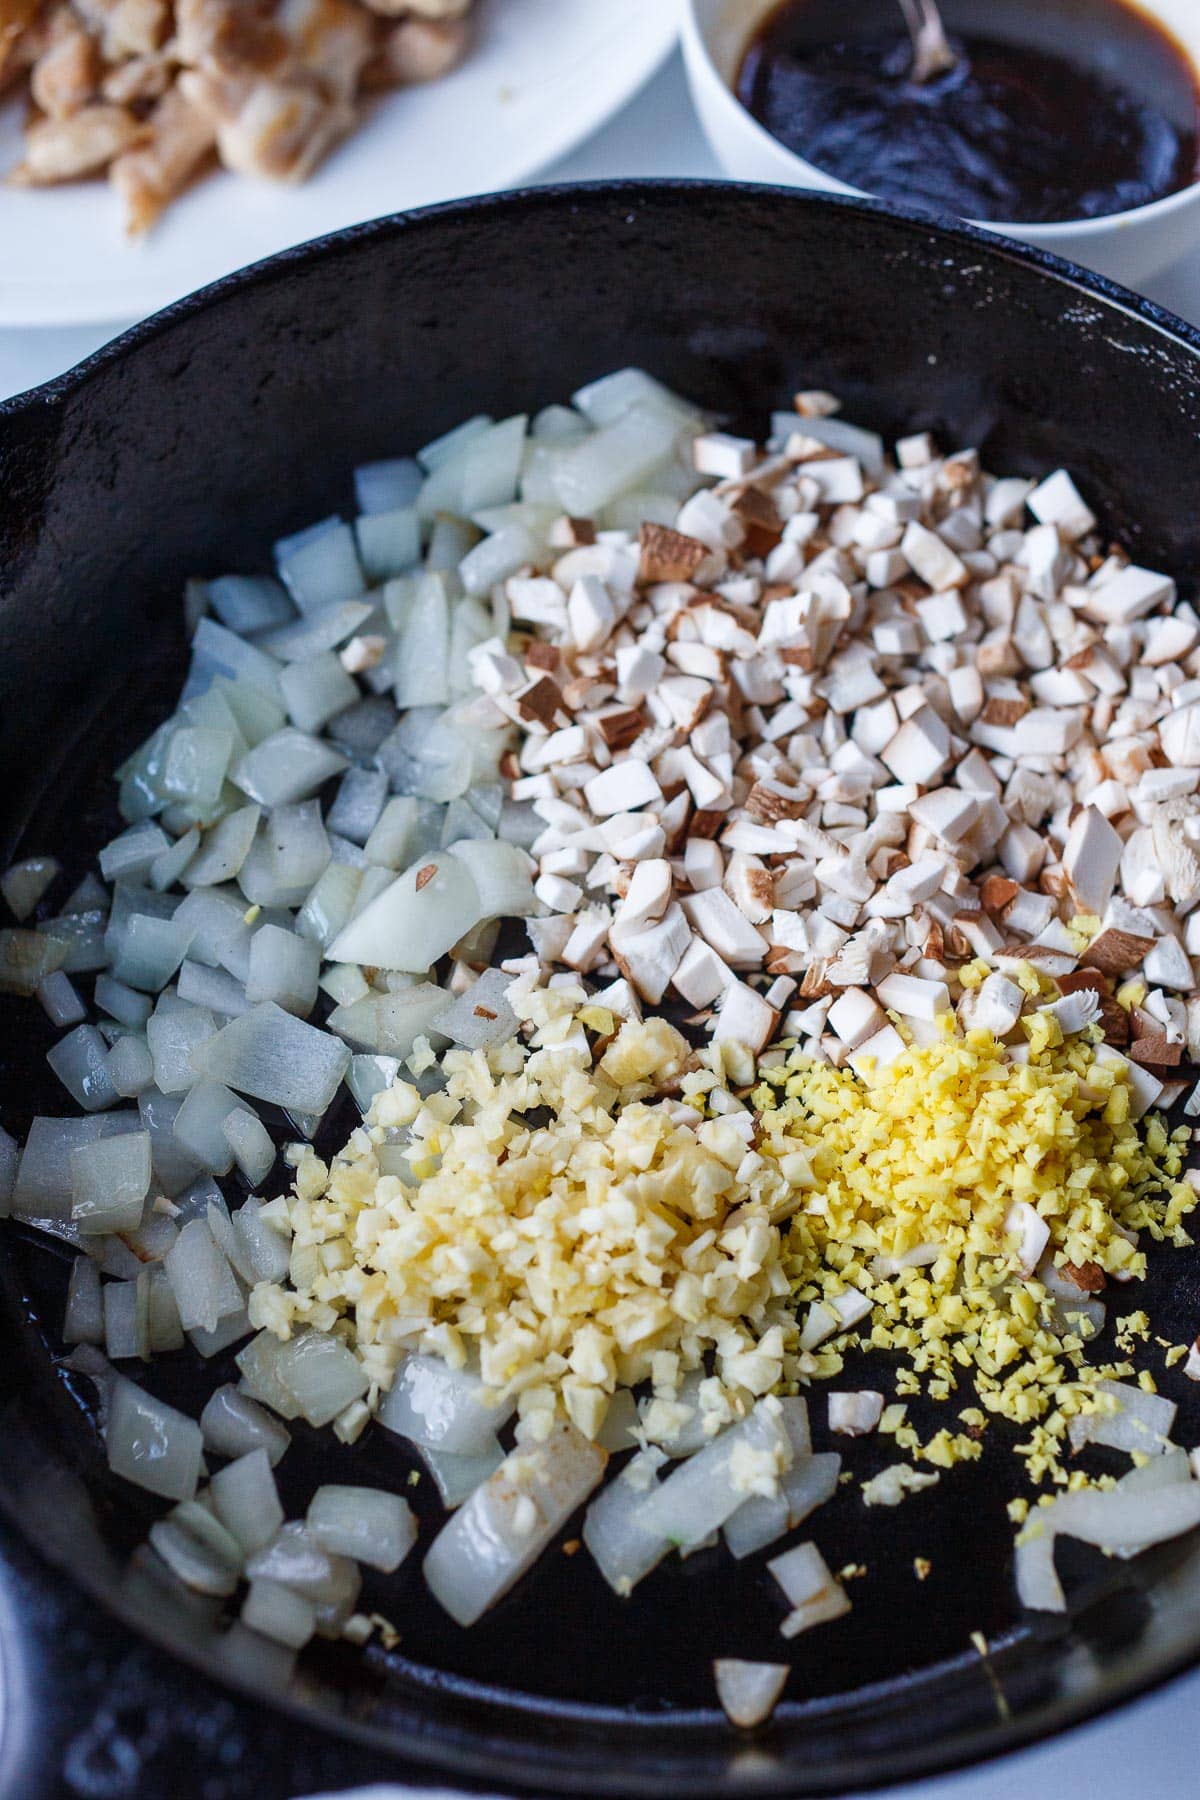 Onions, shiitakes, ginger, garlic sautéing in a pan.